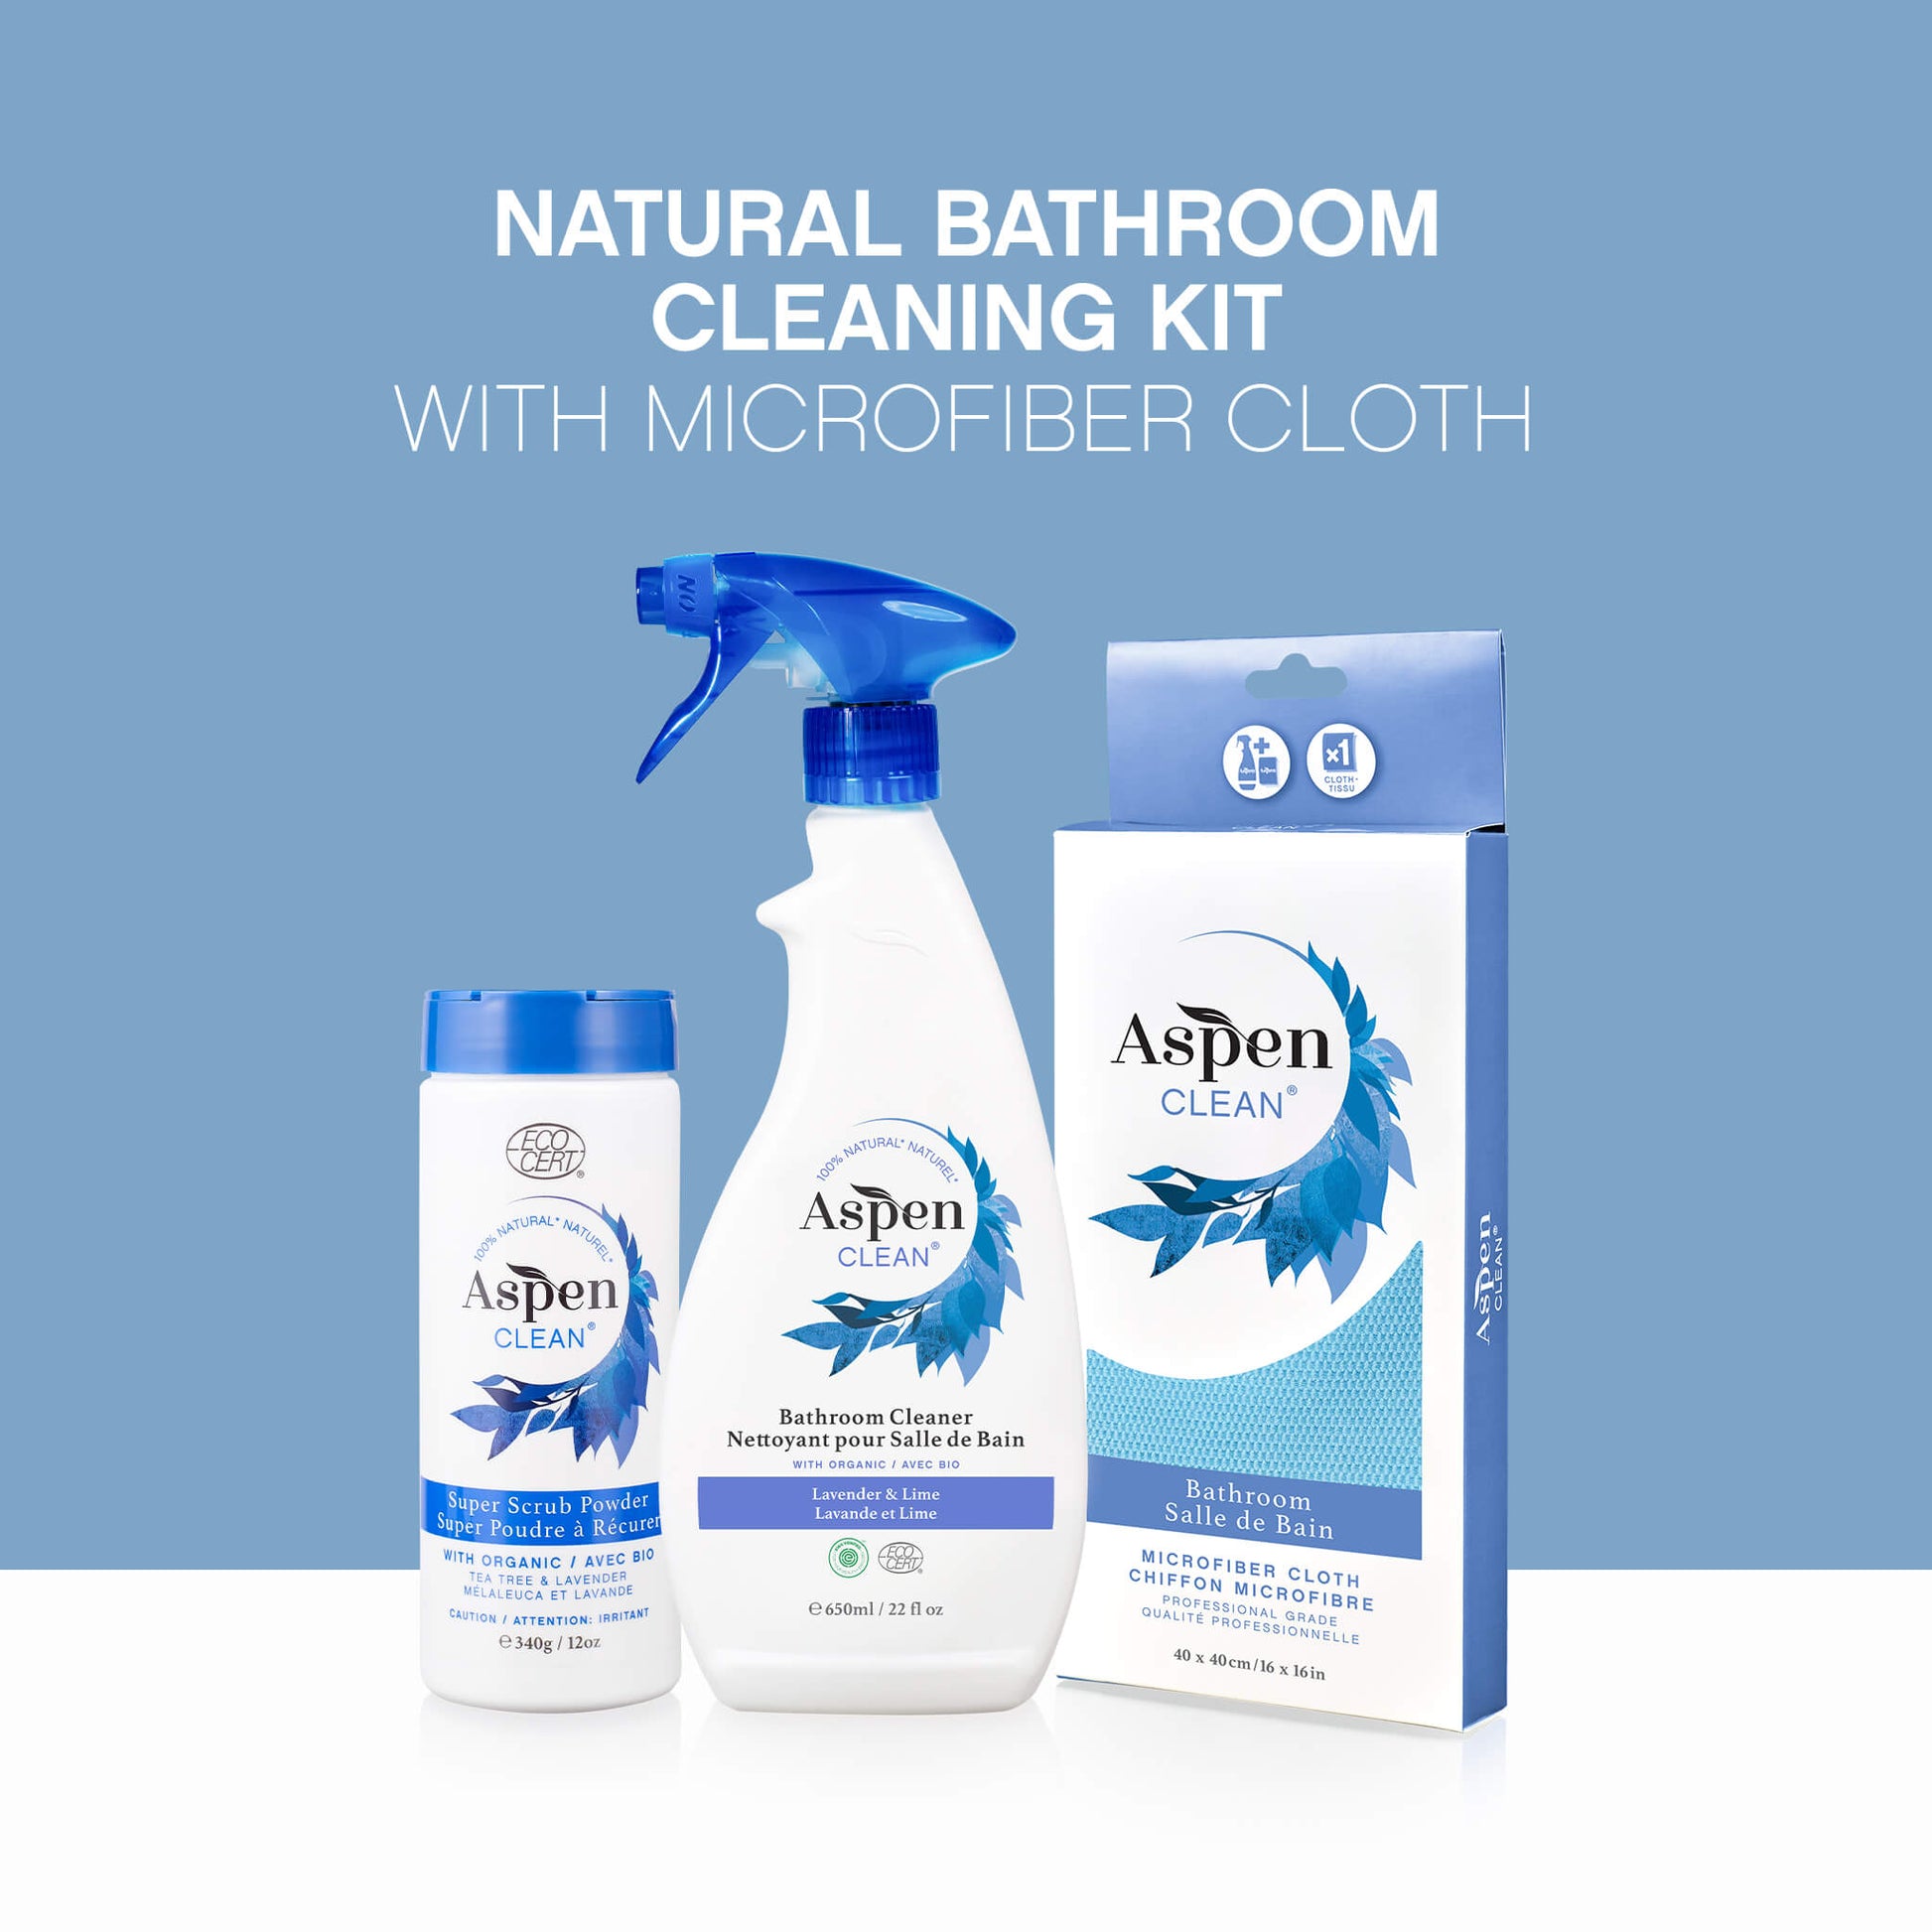 E-Cloth Bathroom Cleaning Kit